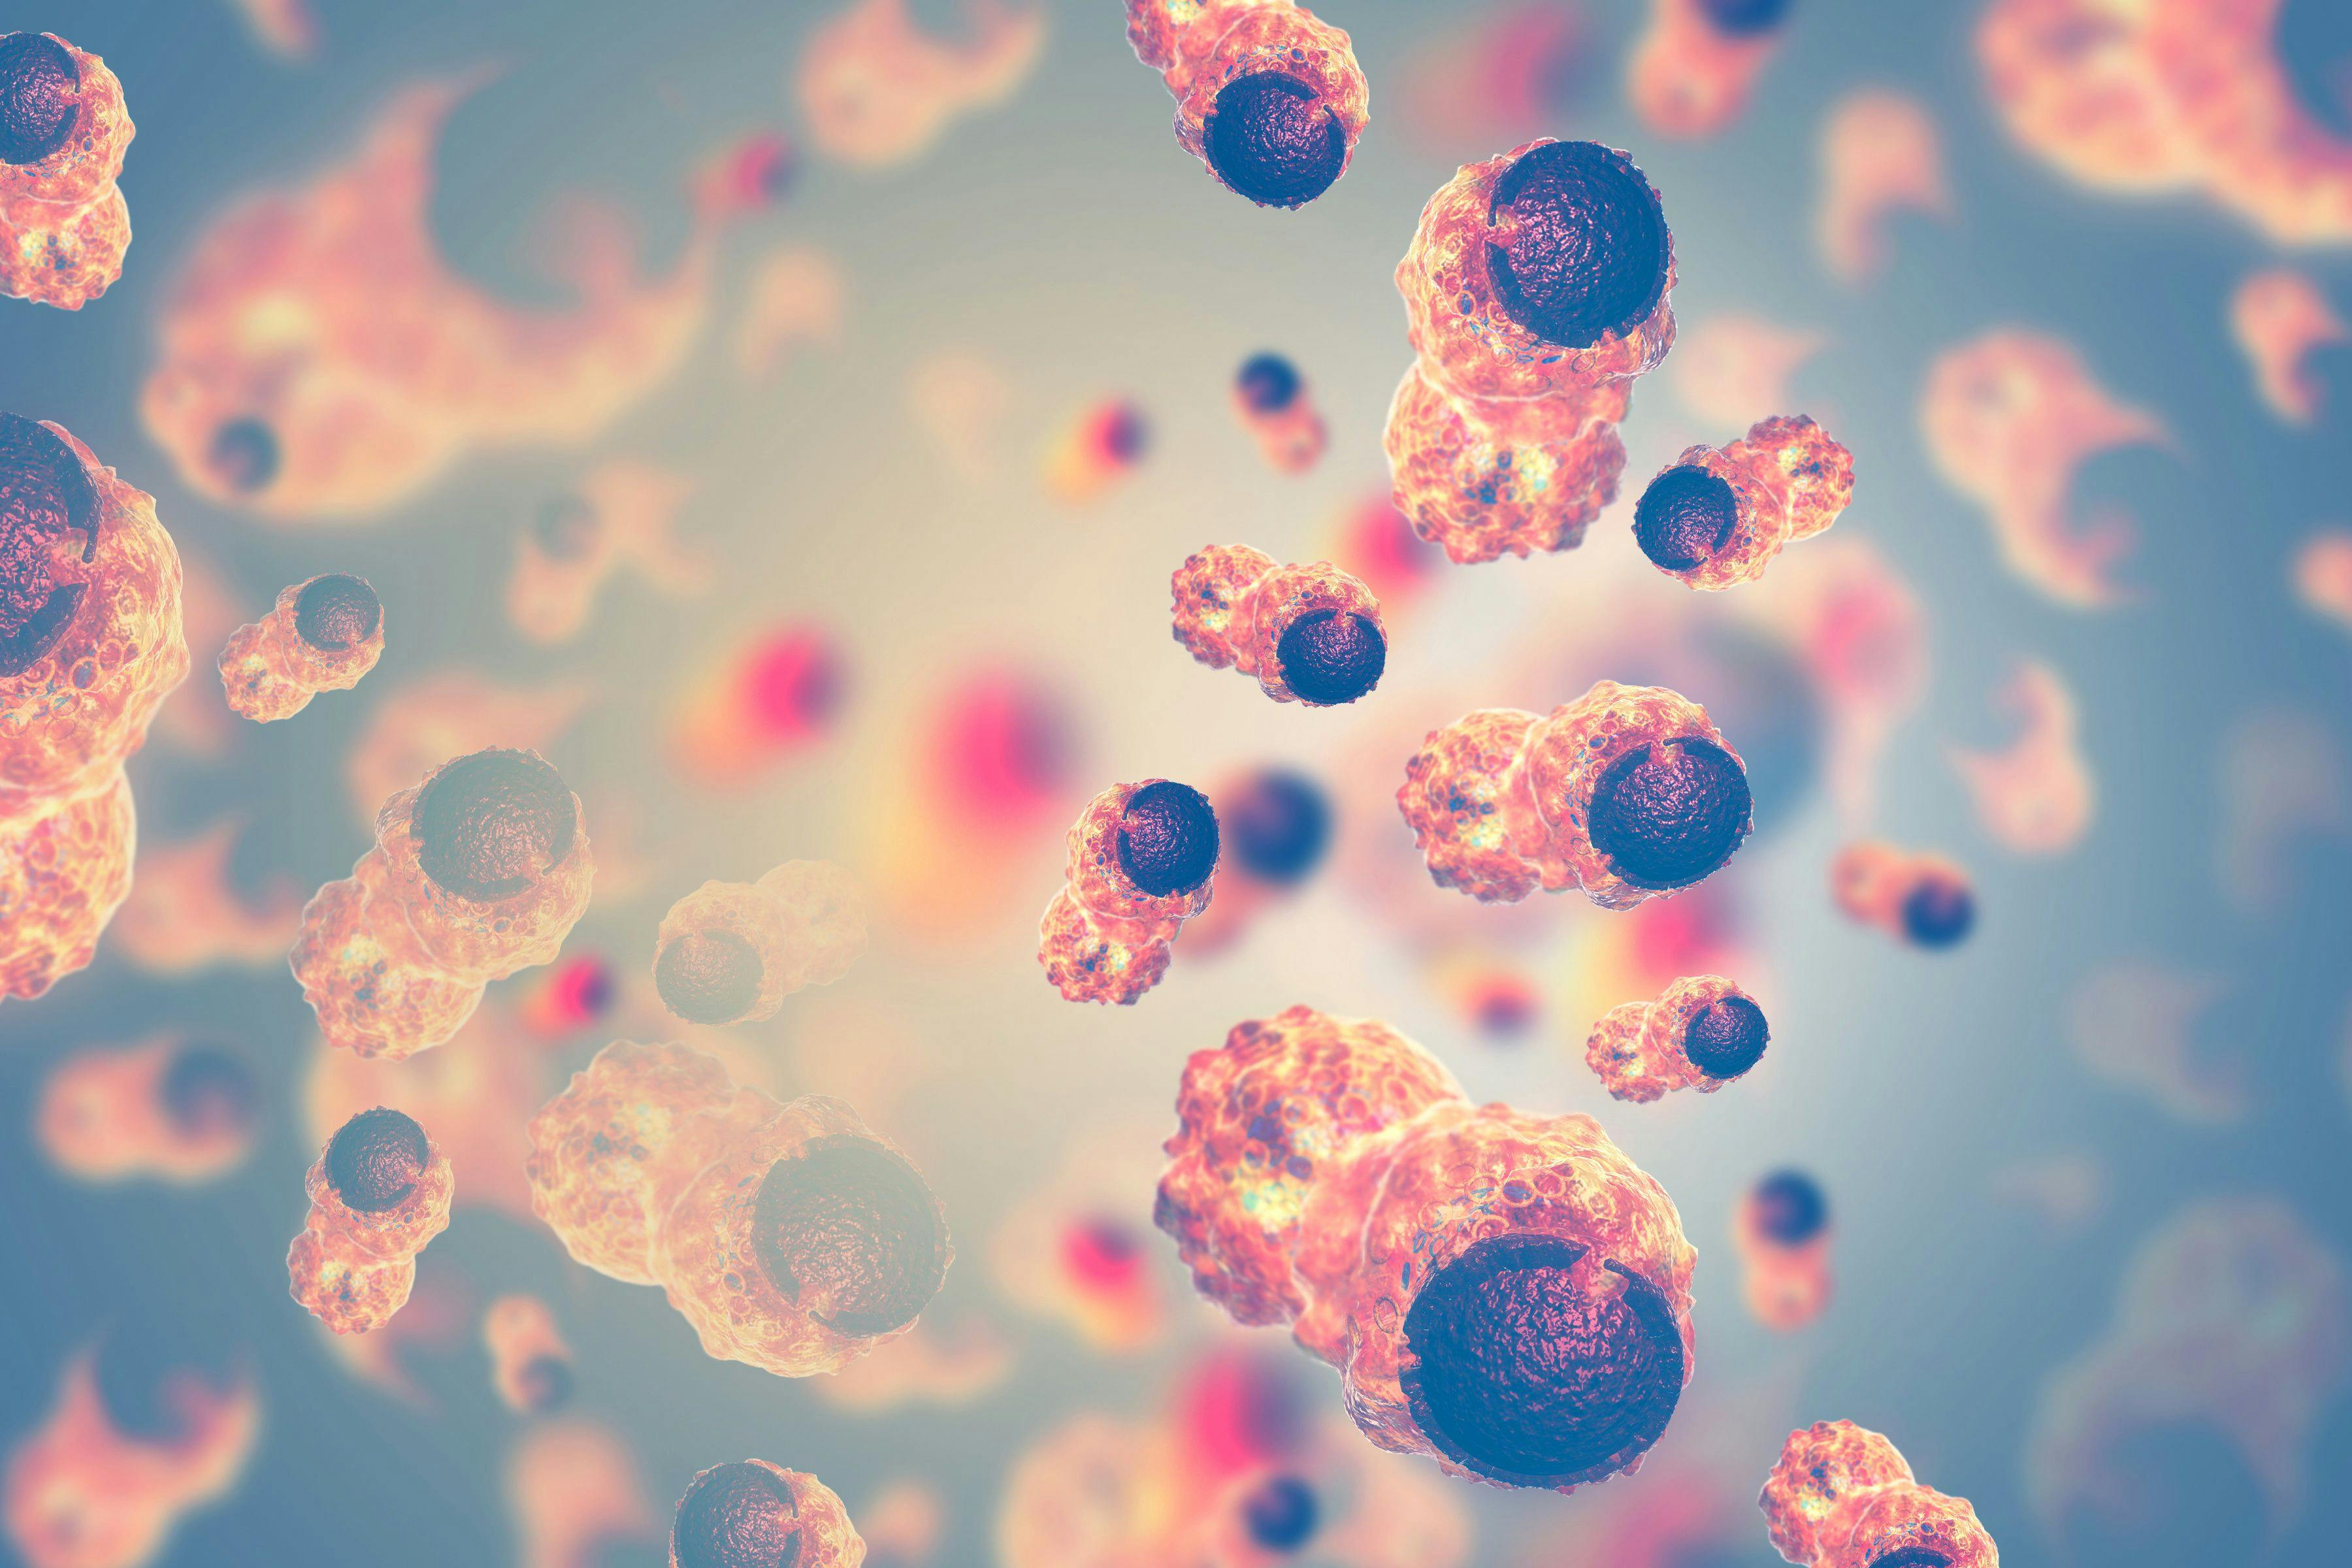 Cancer cells | Image Credit: © Crystal light - www.stock.adobe.com